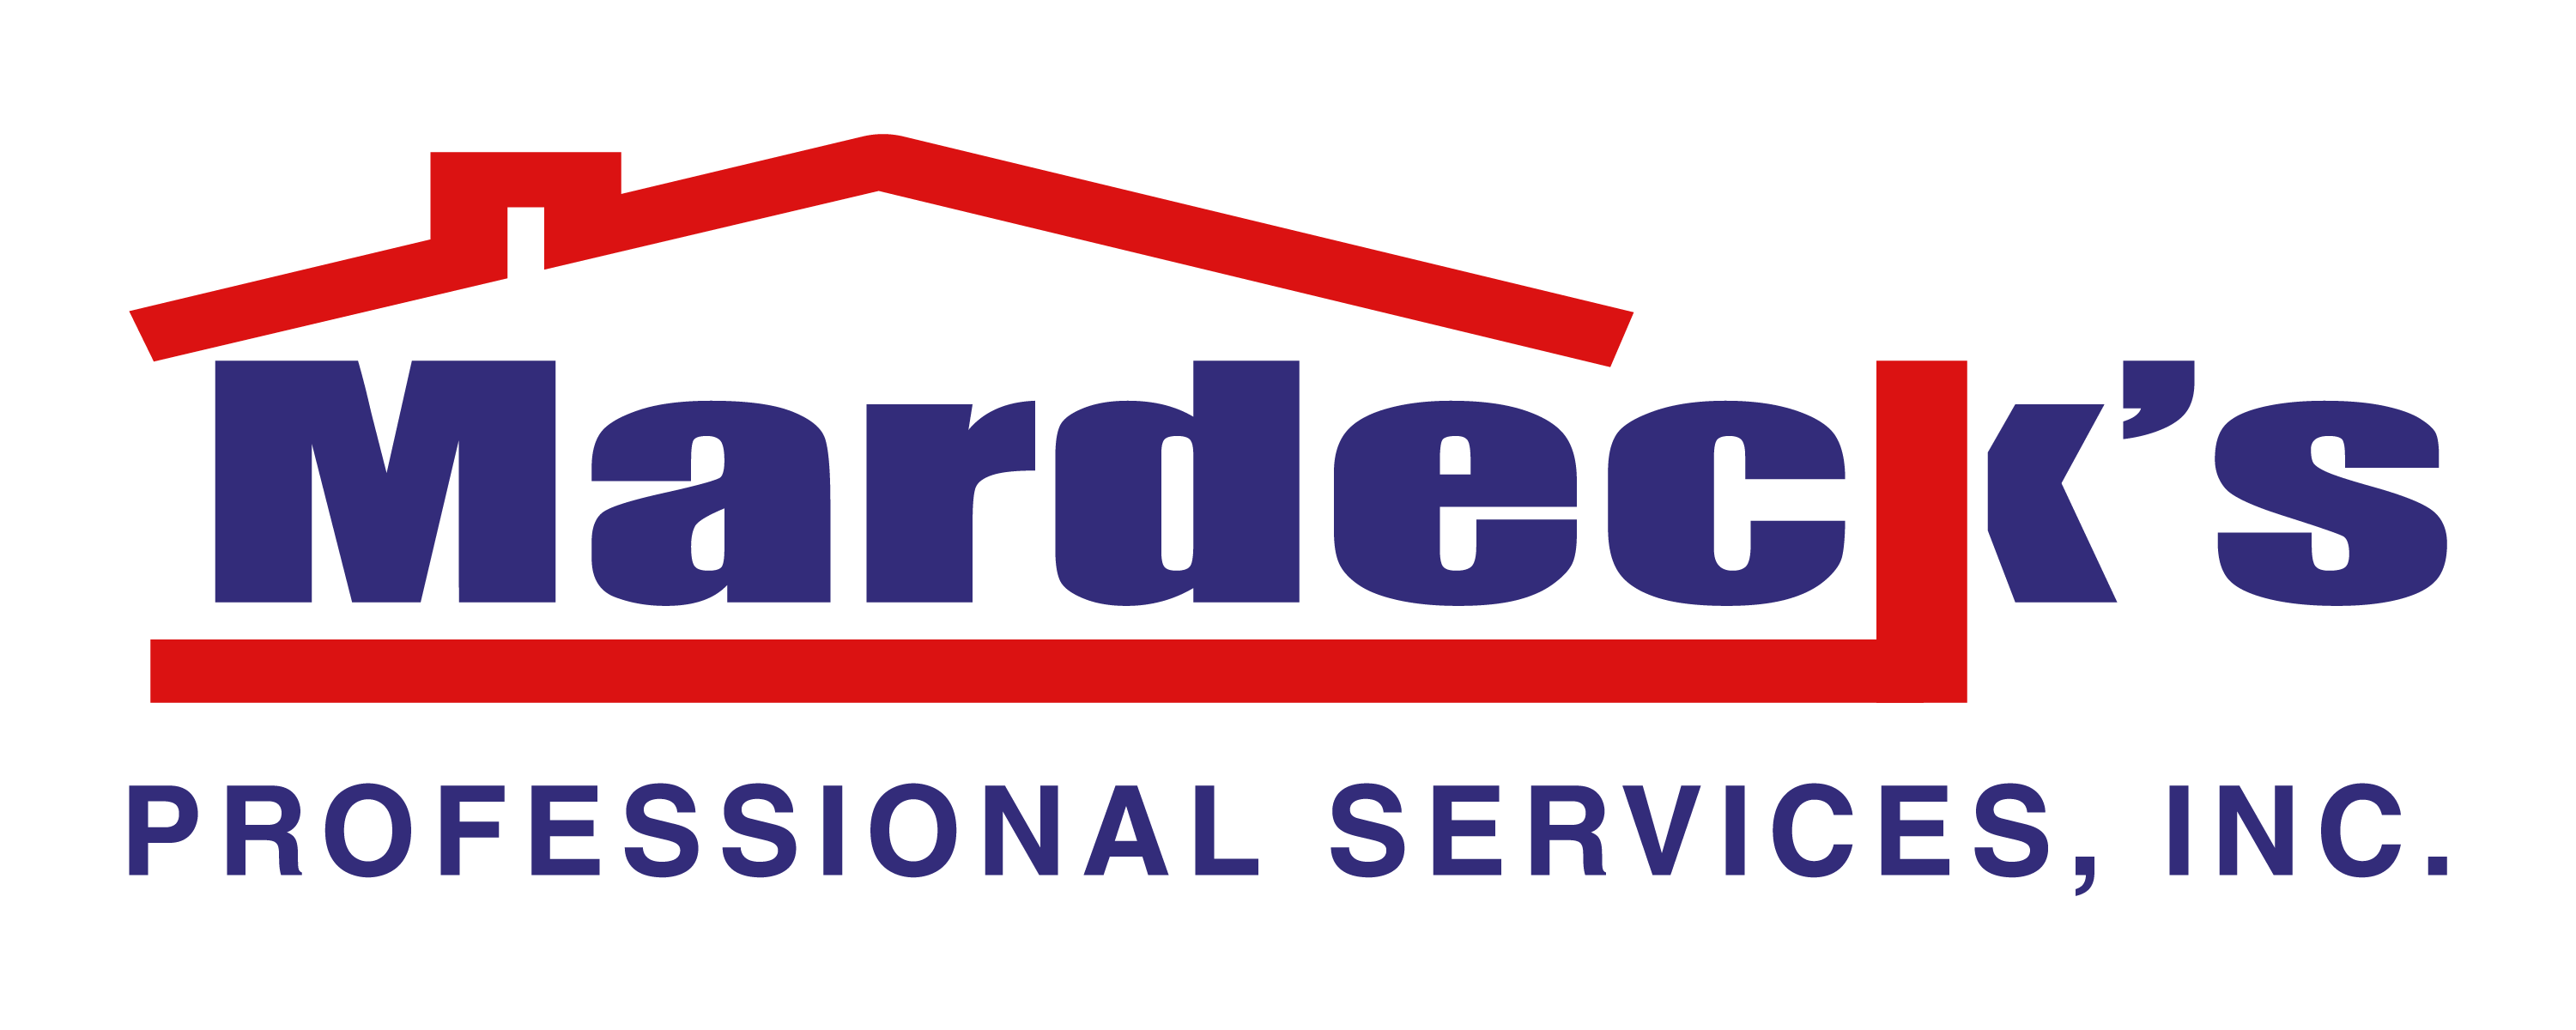 Mardeck's Logo